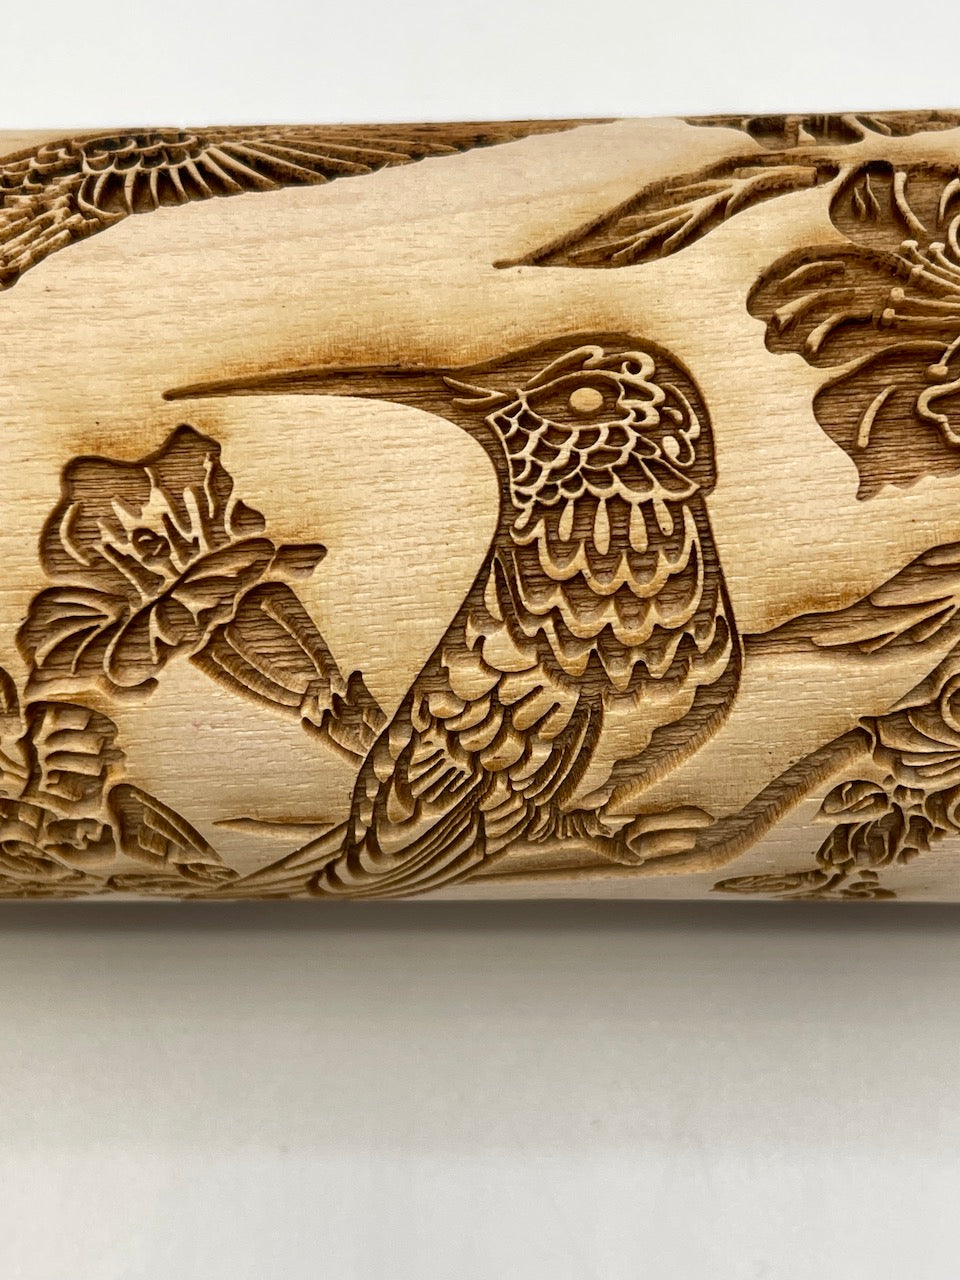 Hummingbird Textured Rolling Pin